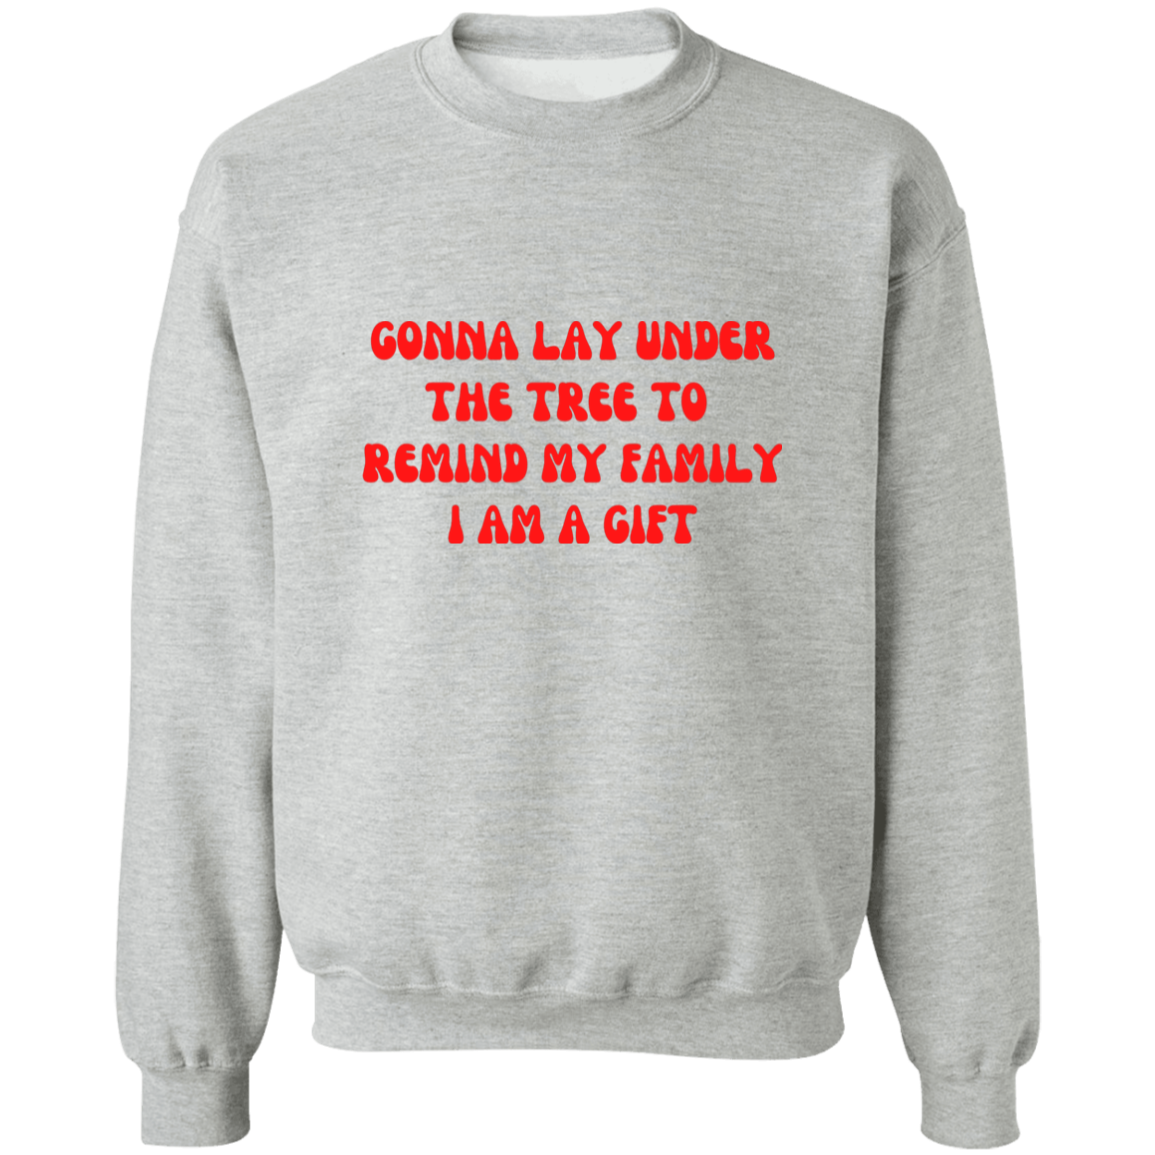 I AM A GIFT  Sweatshirt